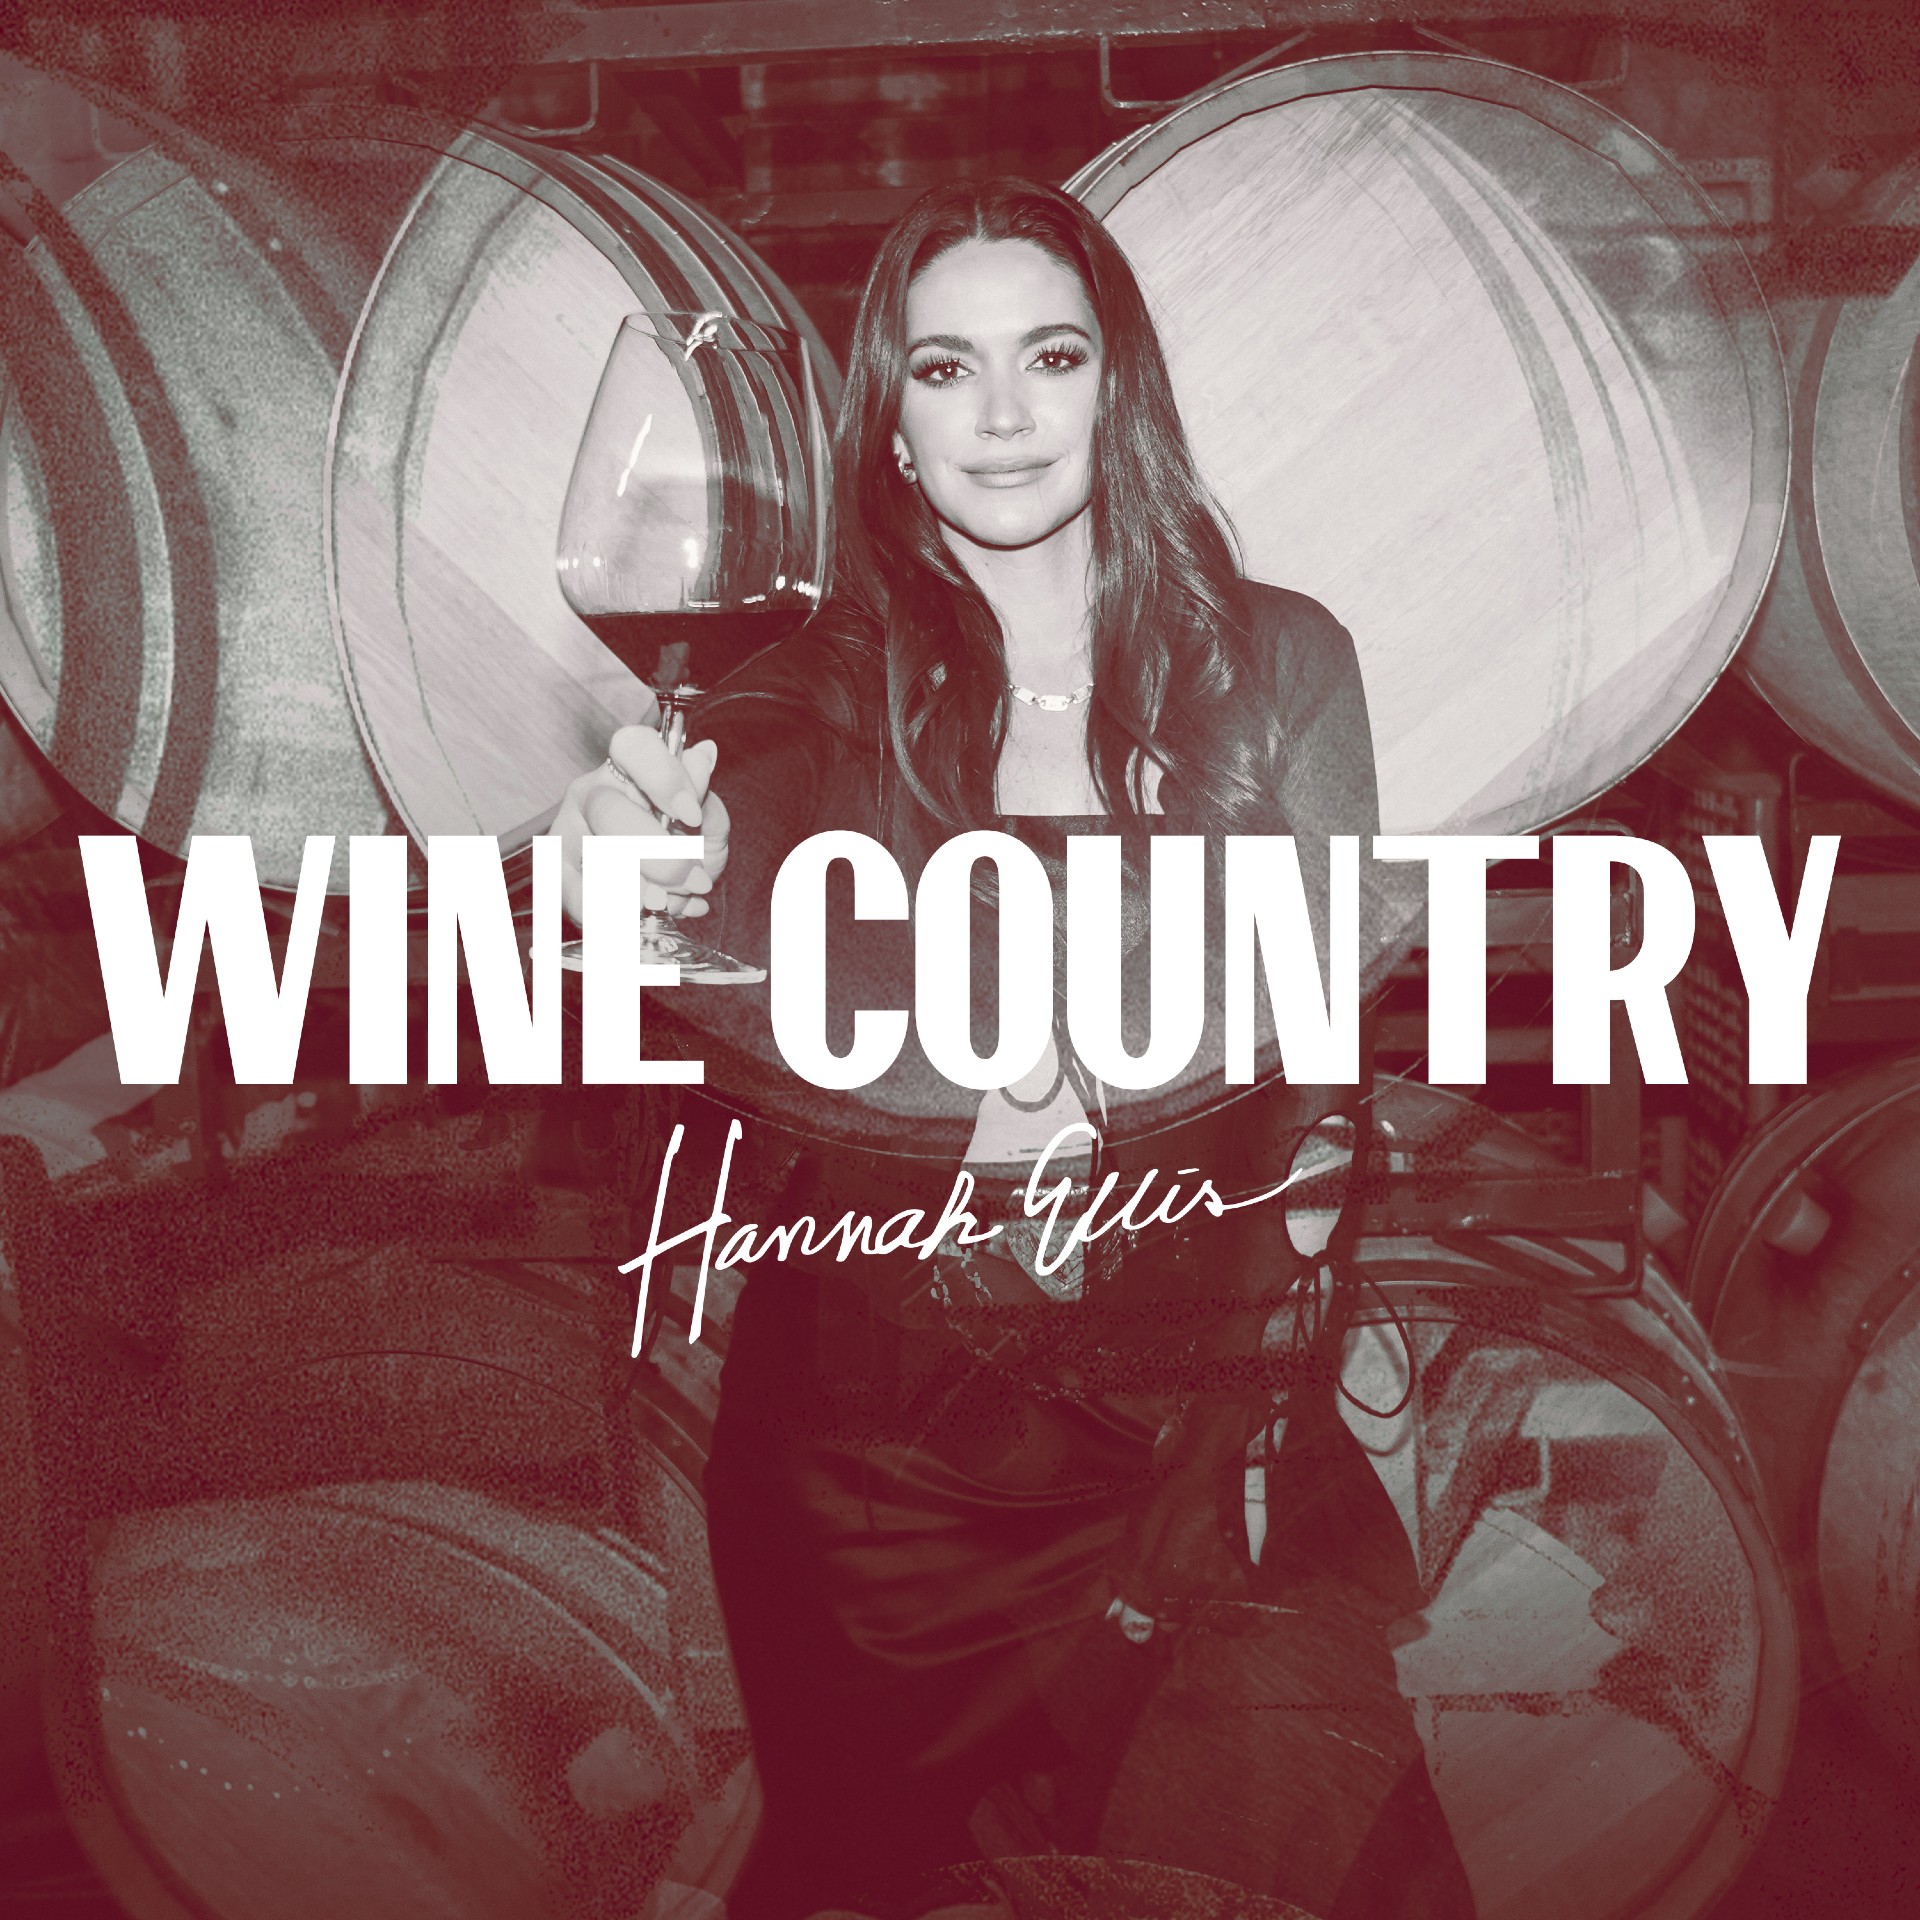 Hannah Ellis “Wine Country” single artwork